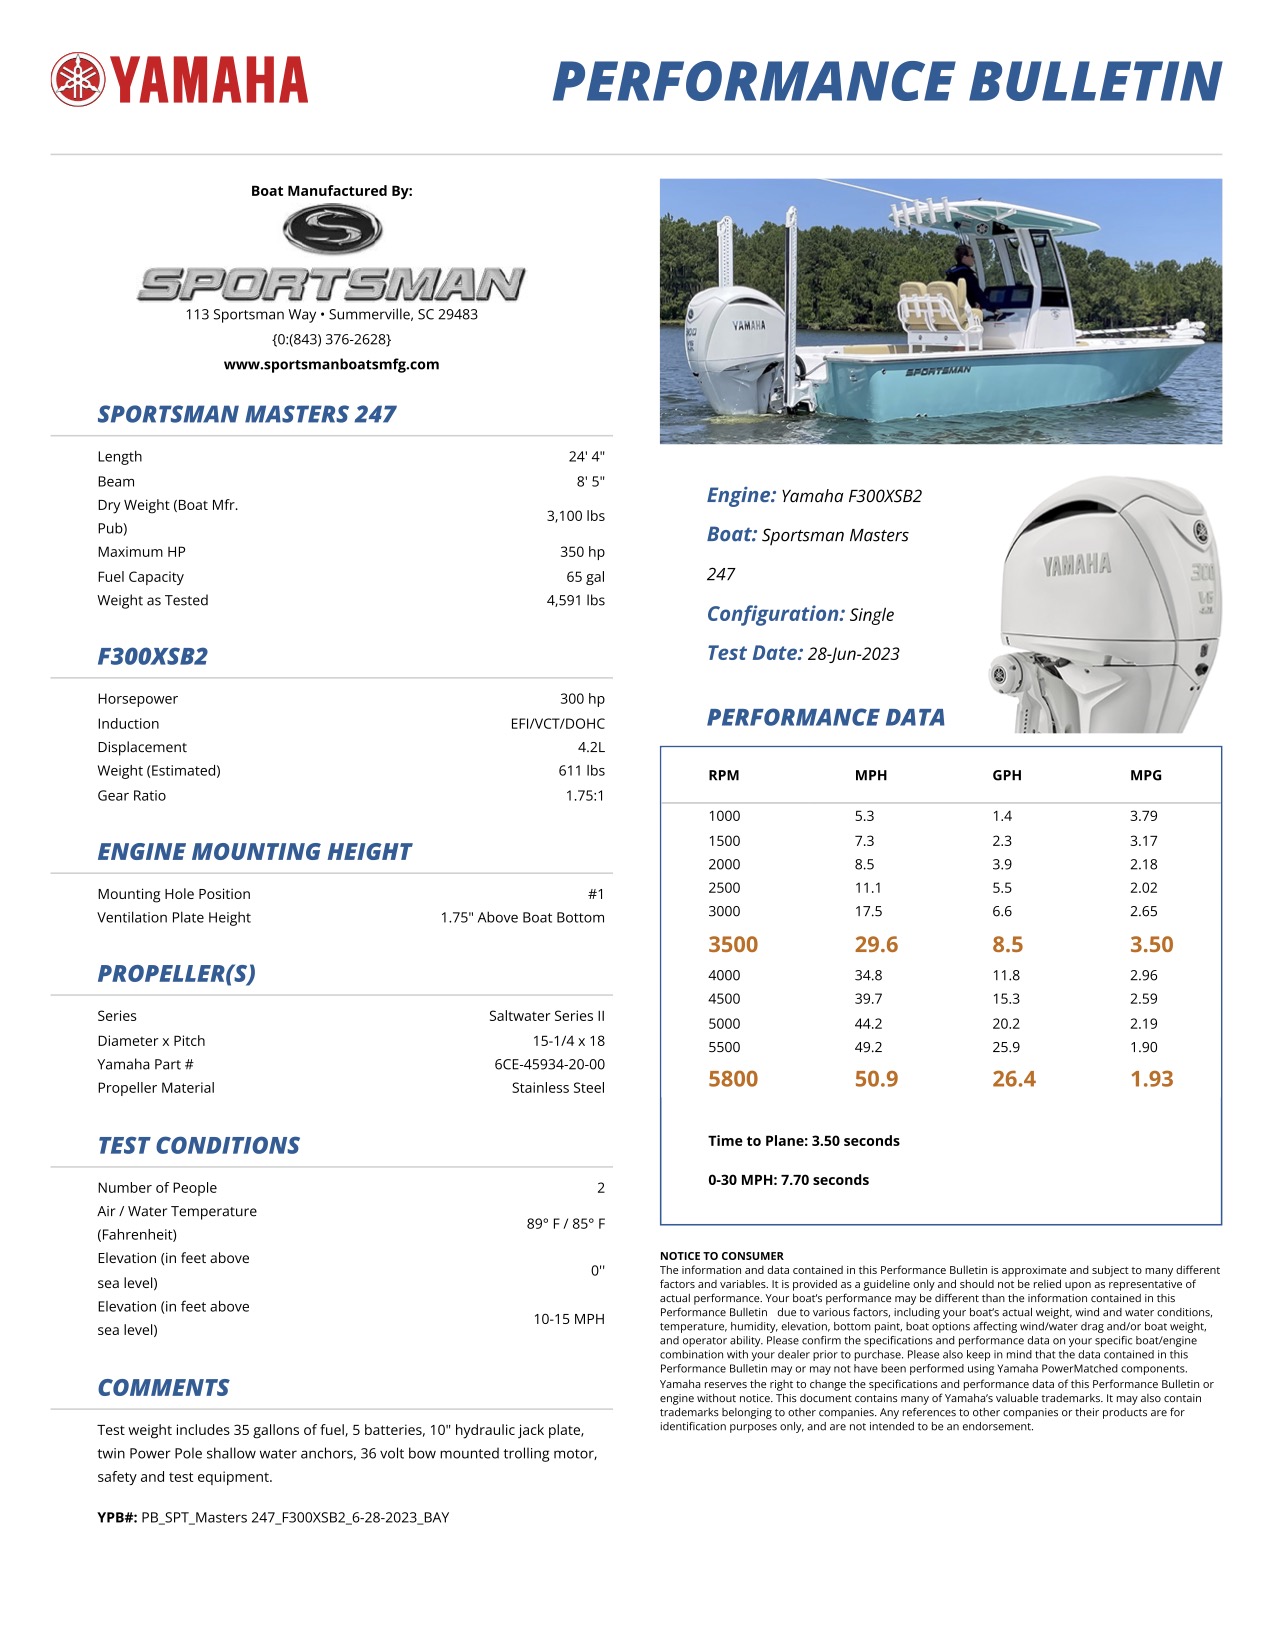 Performance bulletin for 247oe-bay-boat